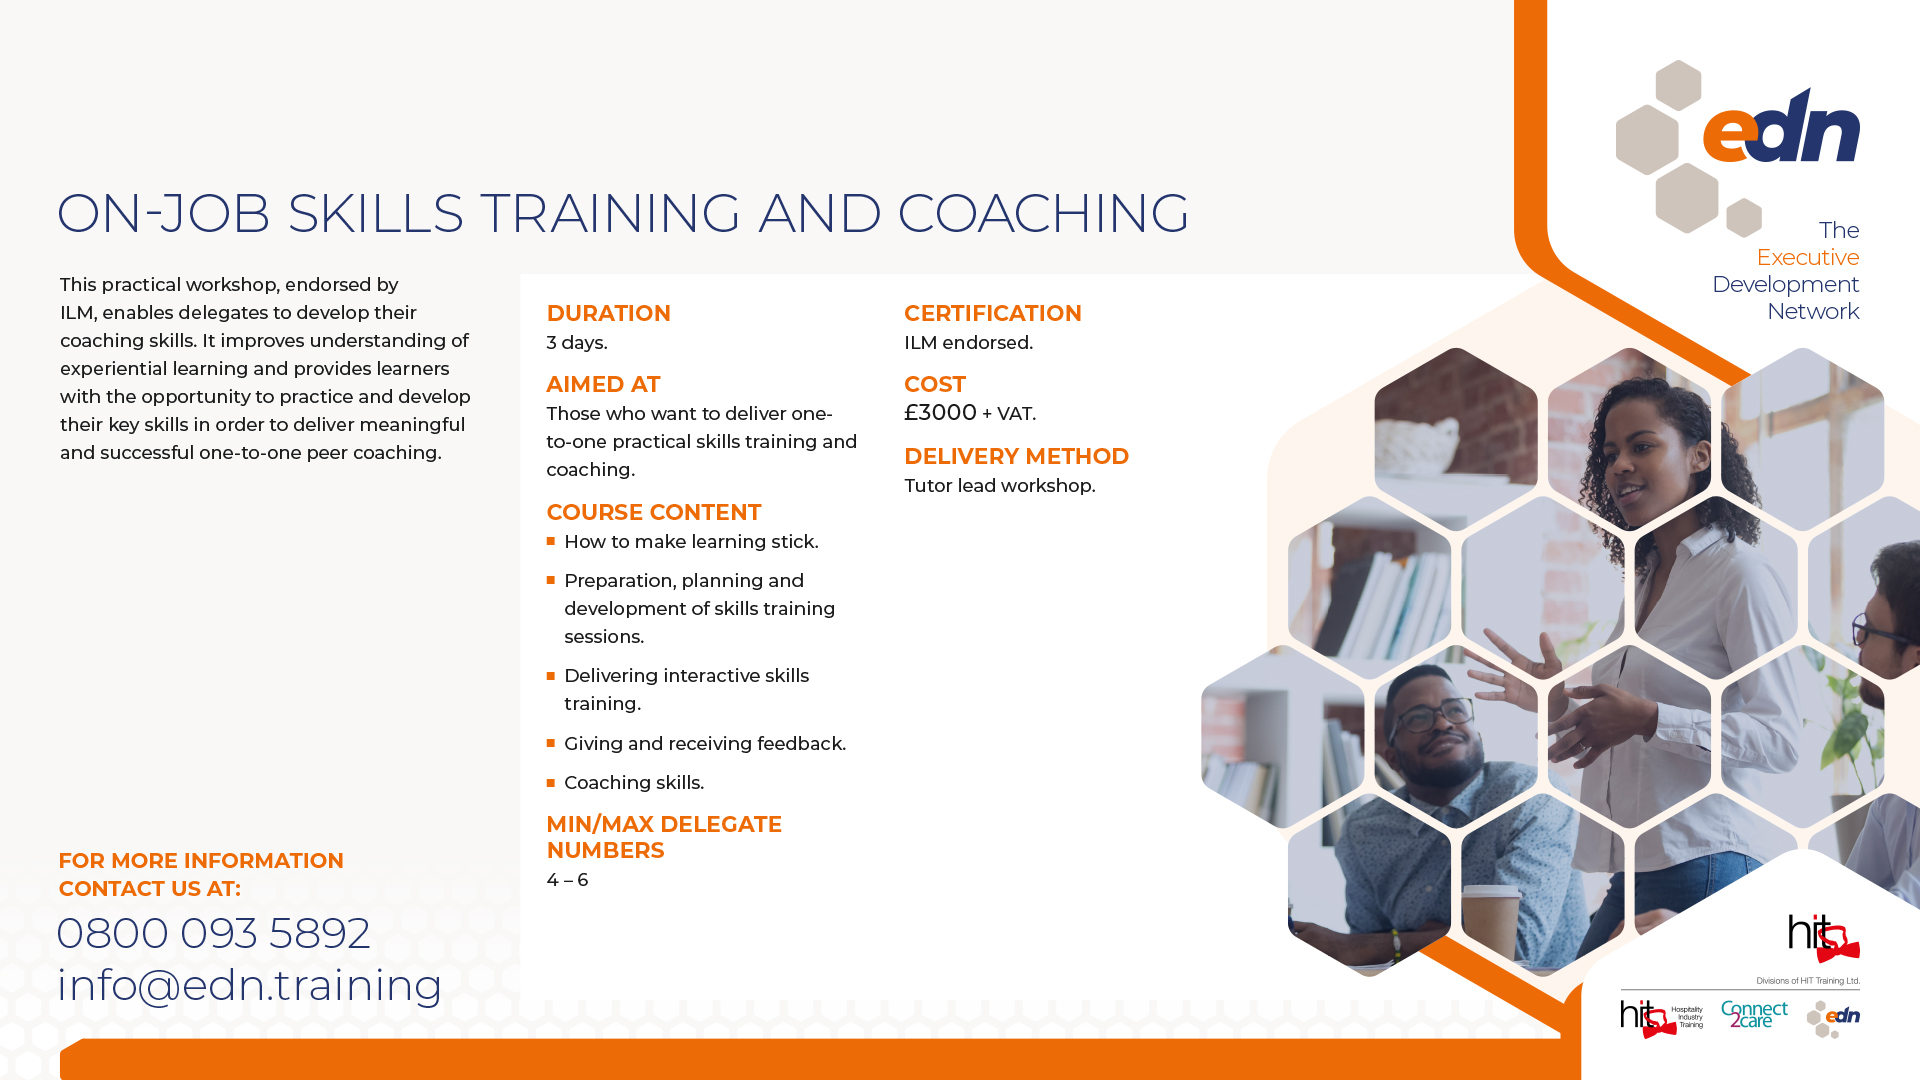 On-Job Skills Training and Coaching fact sheet